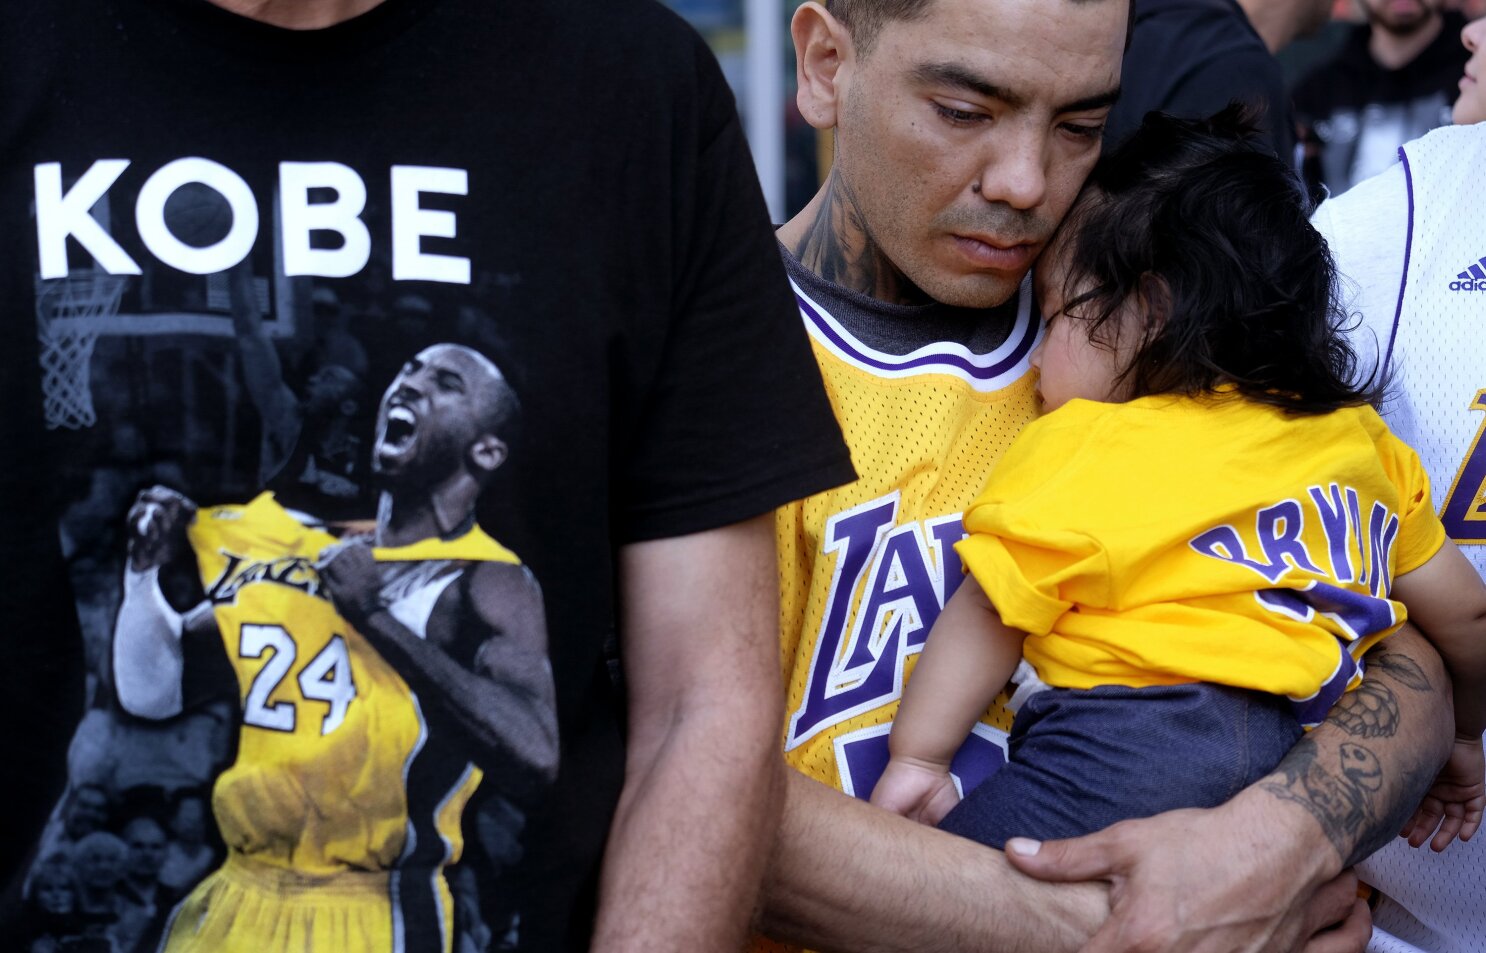 LIVE STREAM: Kobe Bryant memorial held at Staples Center in Los